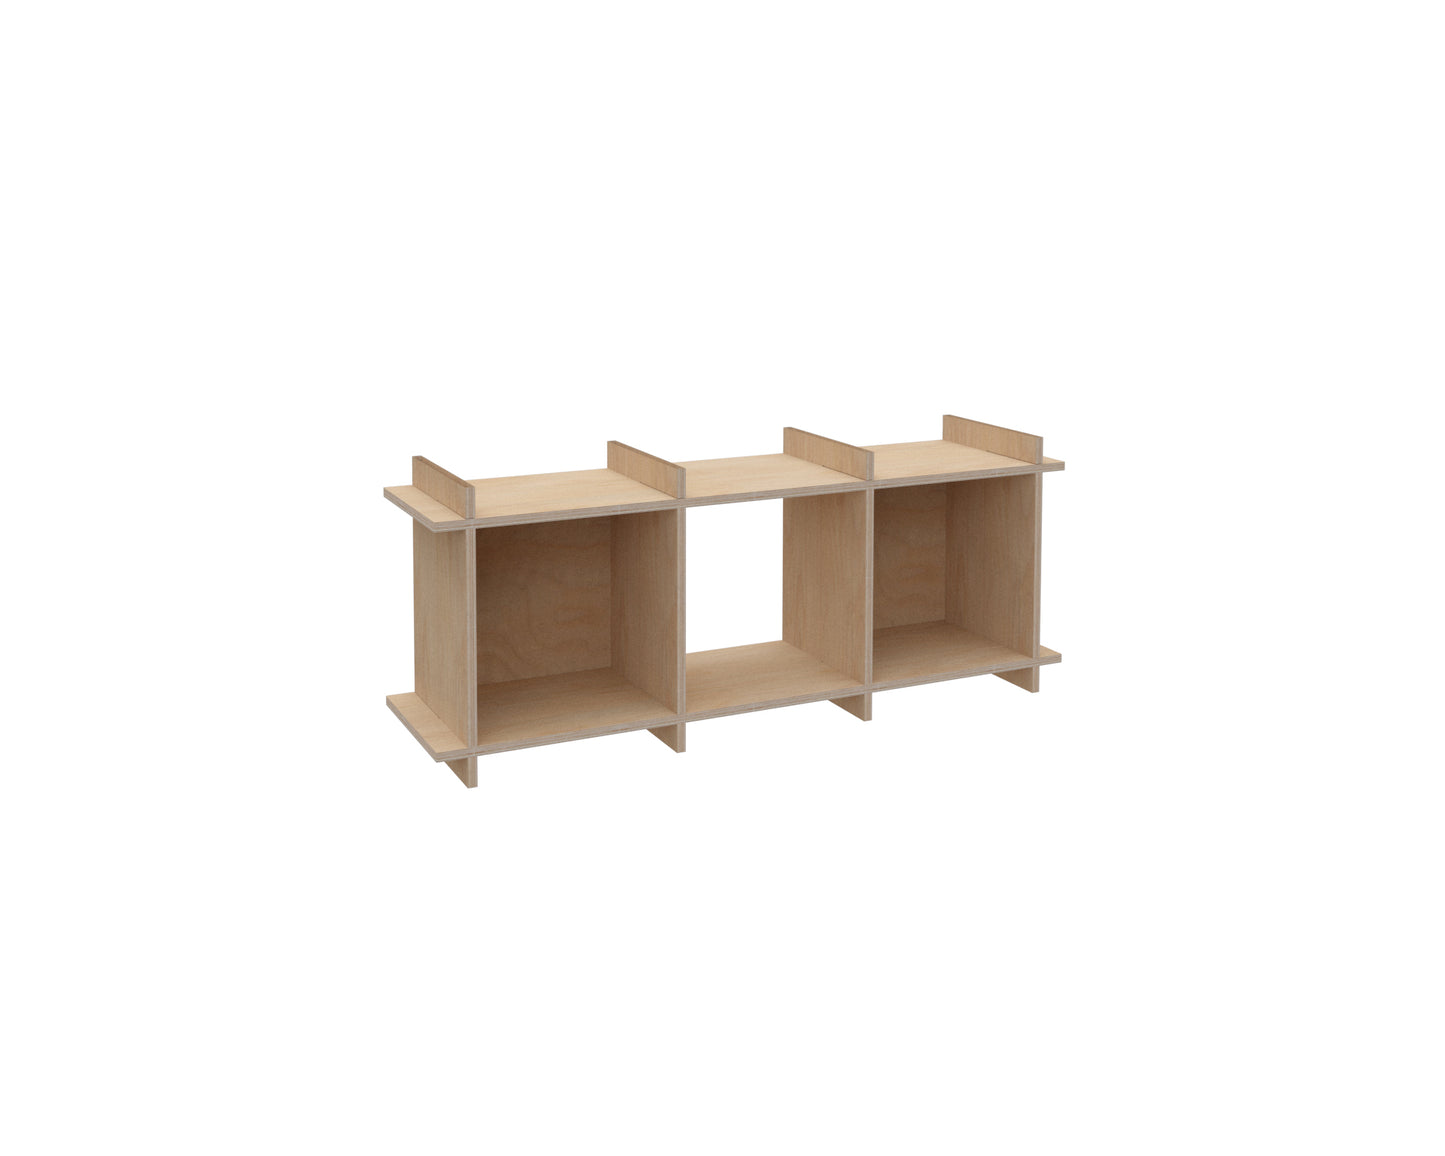 3x1 Modern Modular Plywood Bookshelf Kallax modules japandi design for vinyl records, books, music studio, home - 115x46x33cm / 45x18x13”